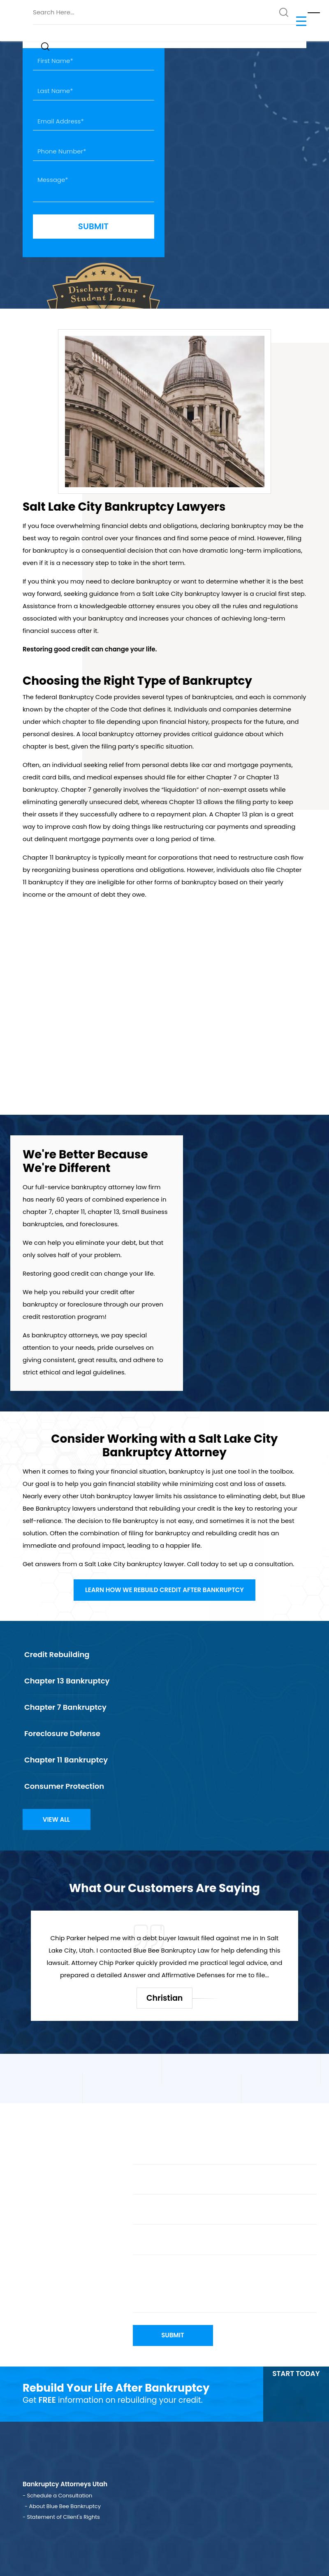 Blue Bee Bankruptcy Law - Salt Lake City UT Lawyers